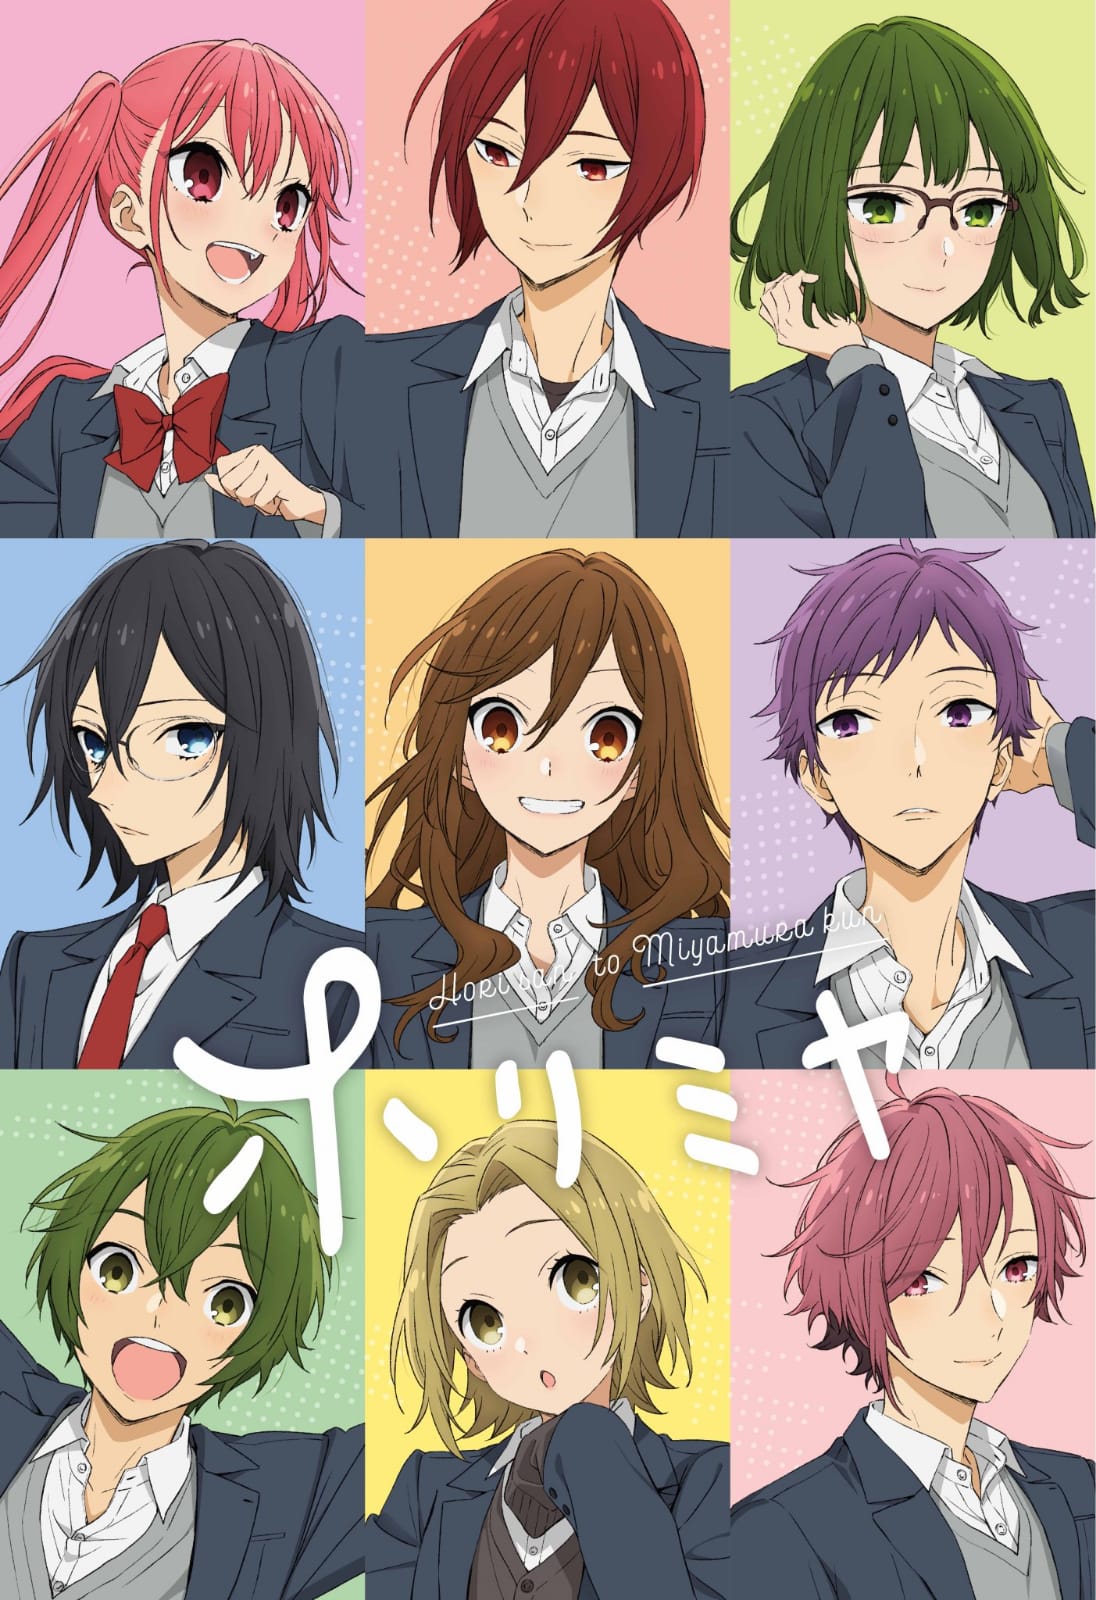 Weekly Anime] Horimiya, Anime dengan Kisah Cinta Remaja yang Menggemaskan